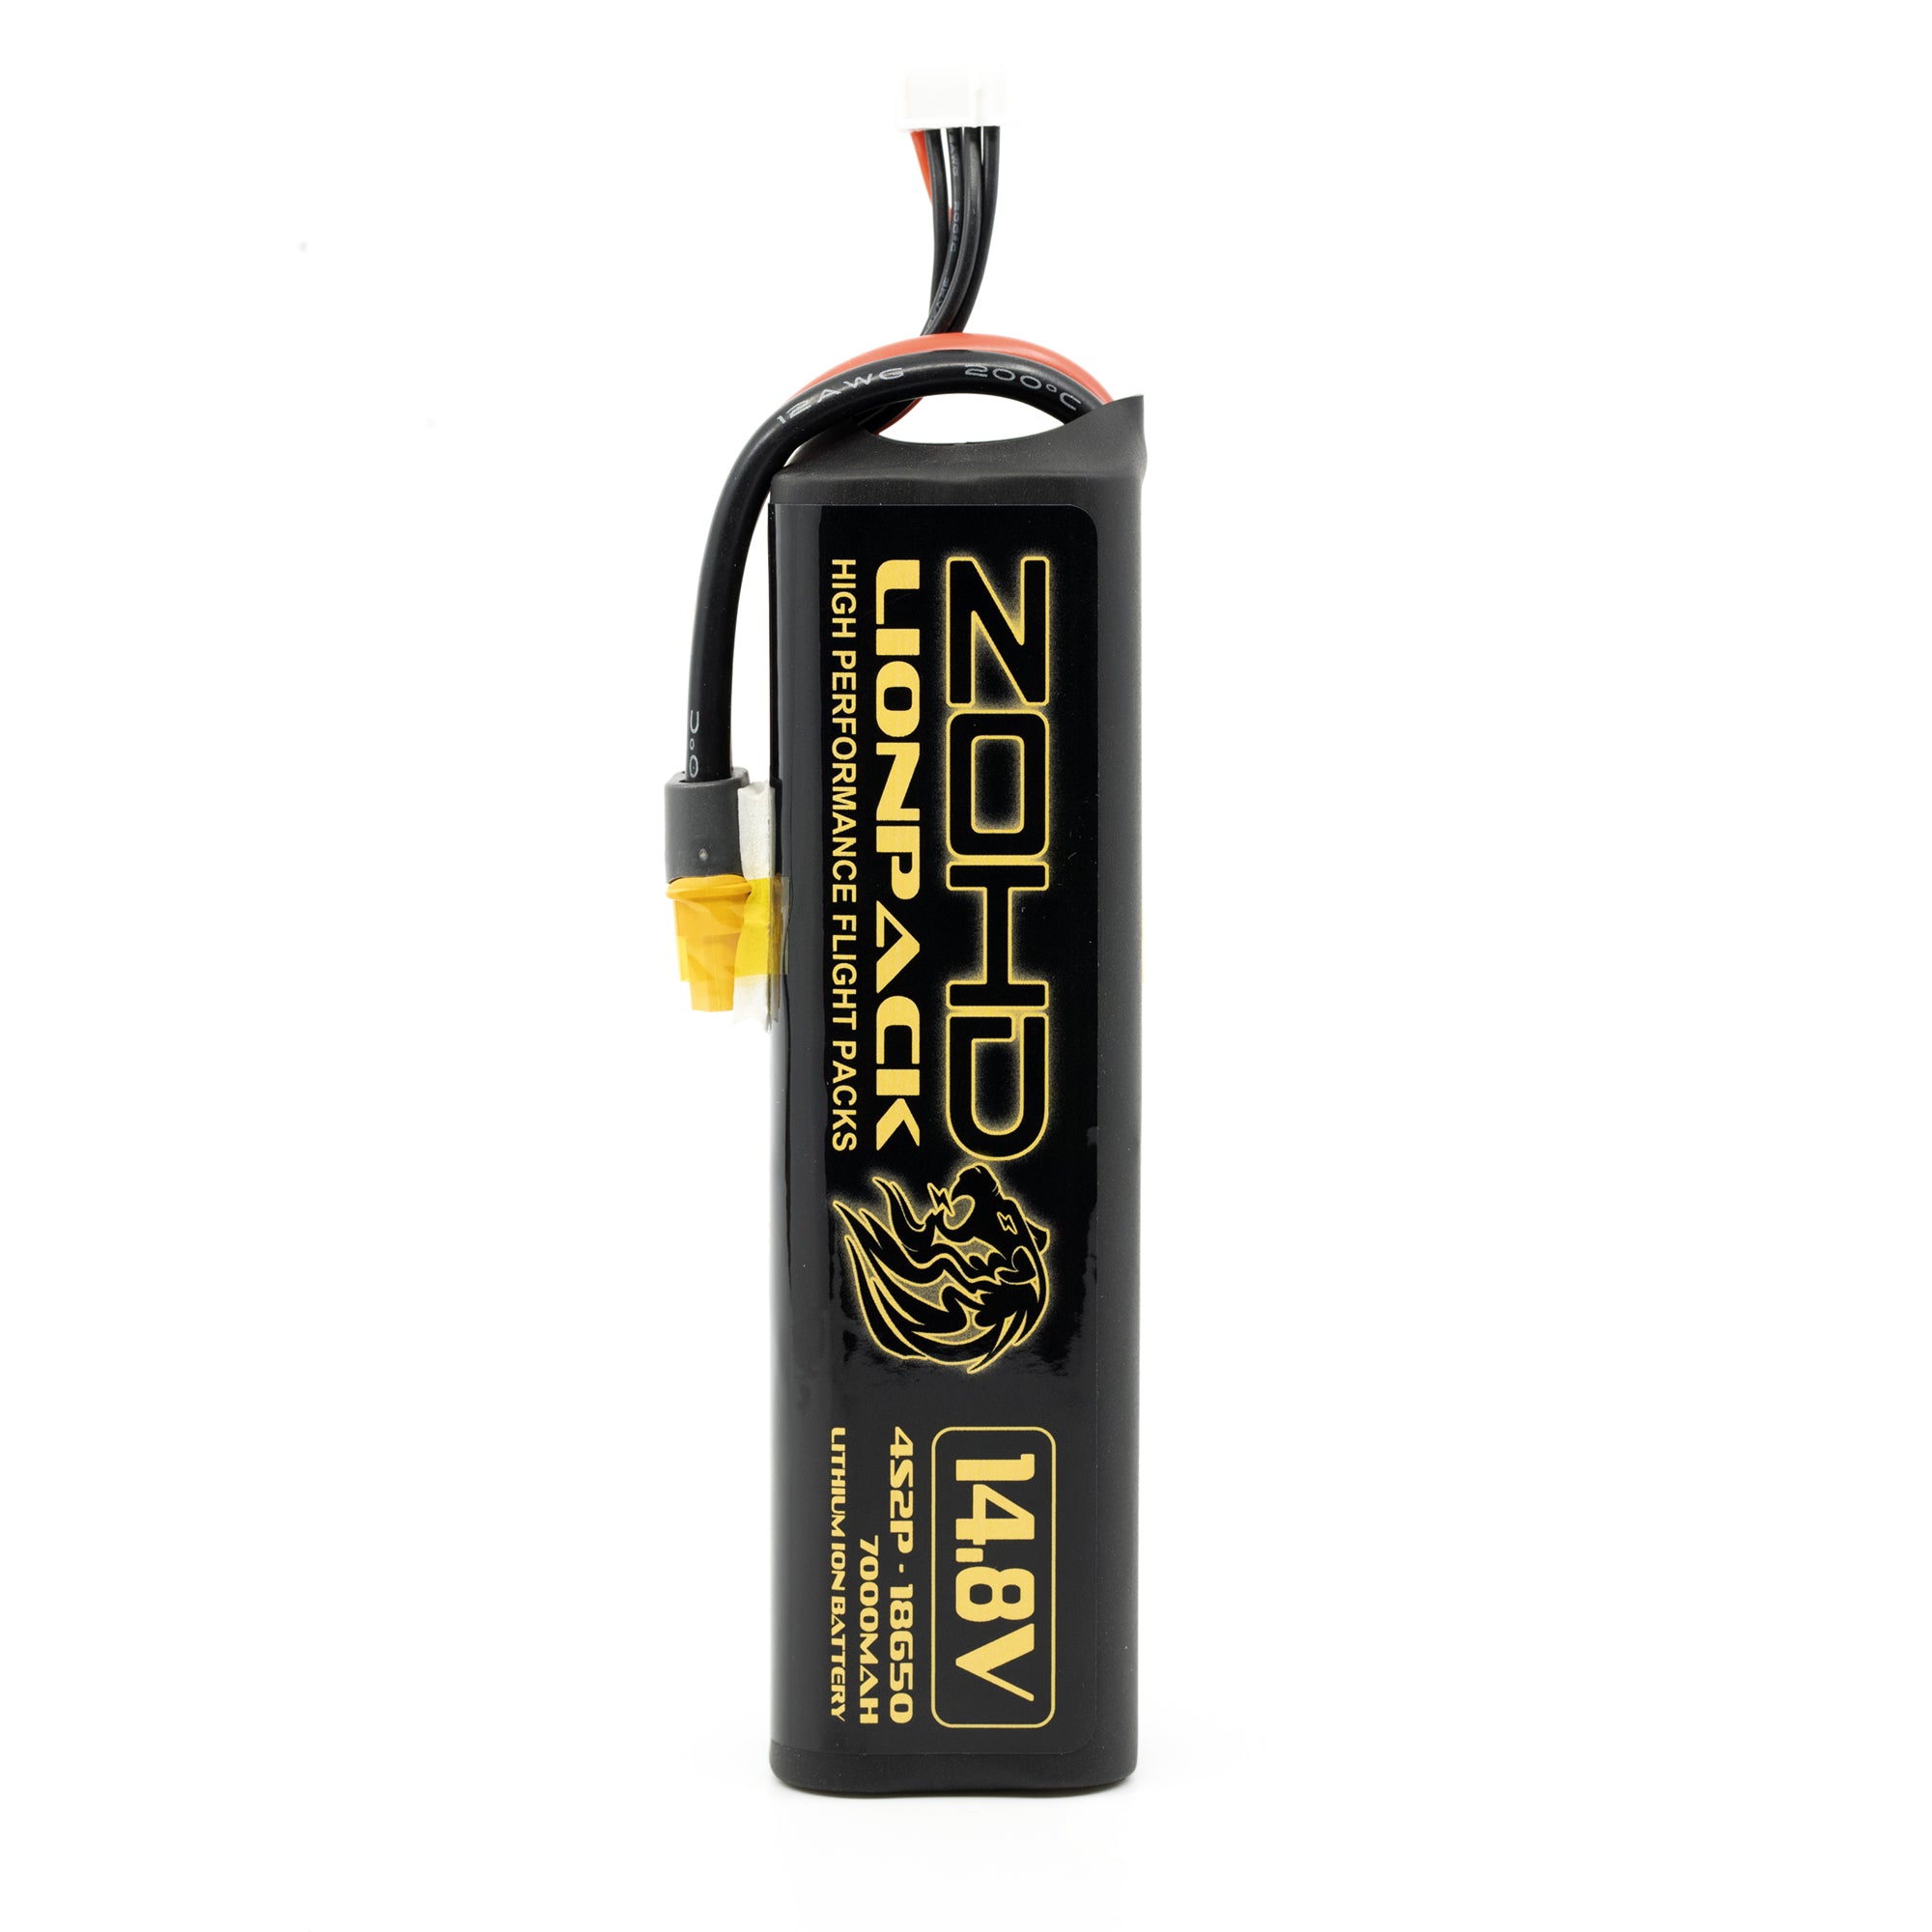 ZOHD Lionpack 18650 4S2P 7000mAh Li-Ion Battery [DG]